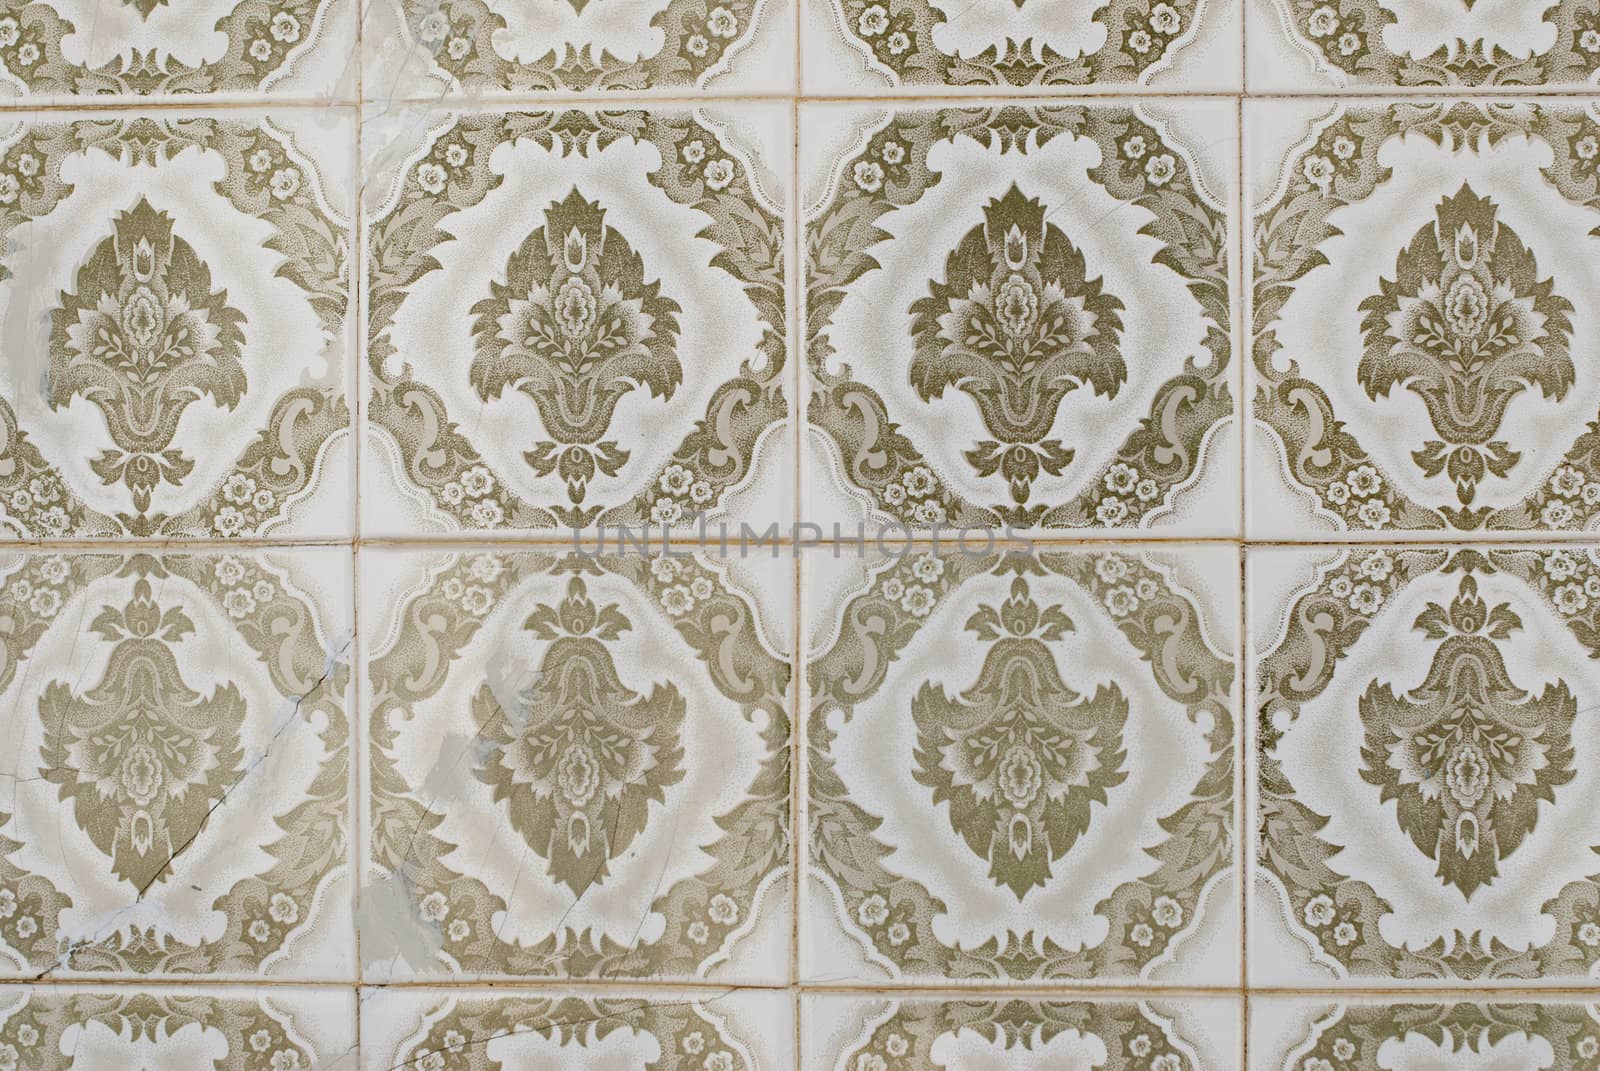 Portuguese glazed tiles 213 by homydesign